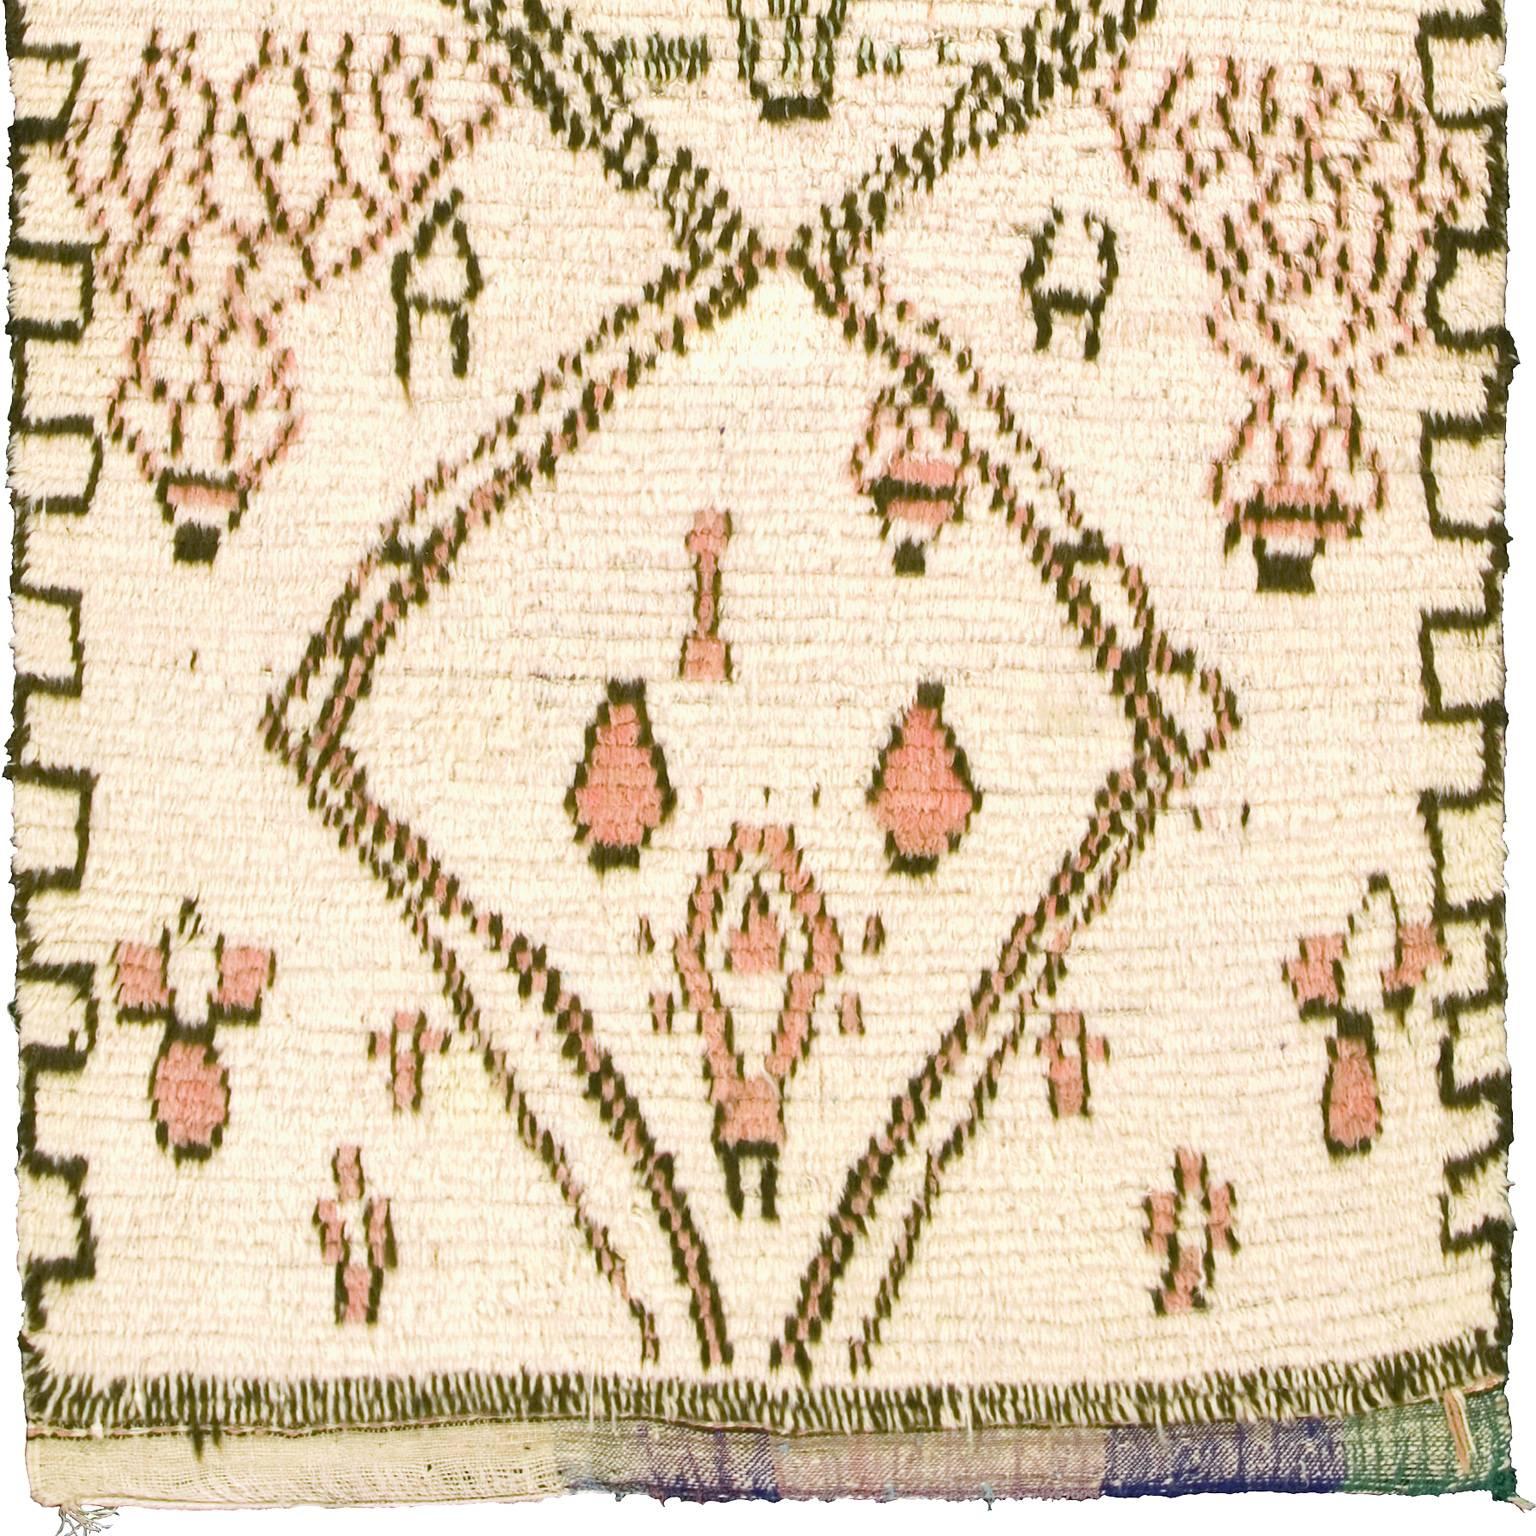 Mid-20th century Moroccan Beni Ouarain carpet
Morocco, circa mid-20th century
Handwoven.